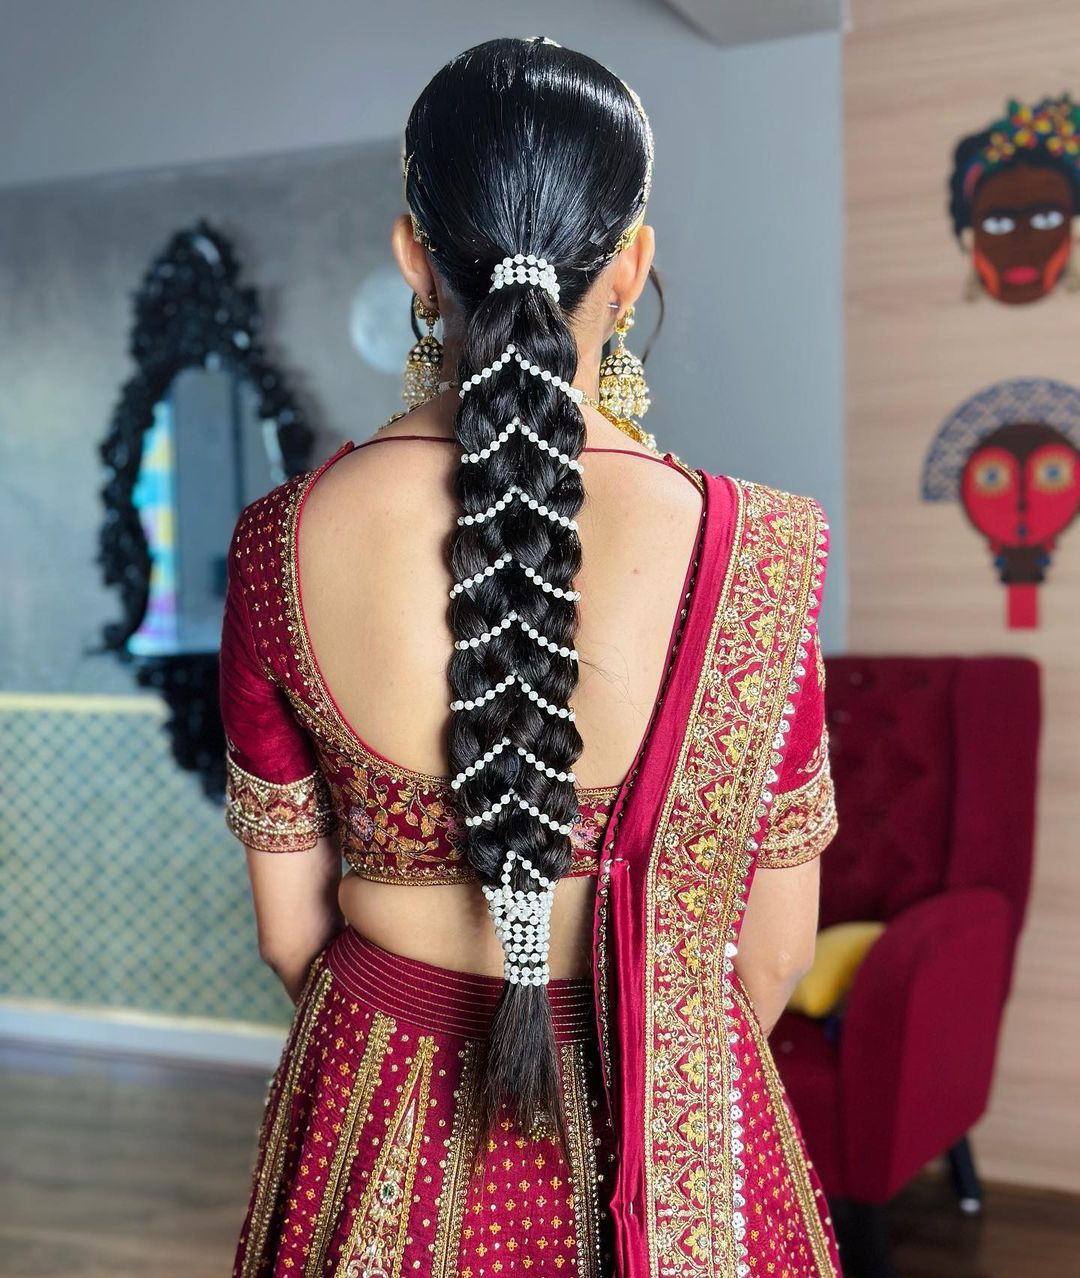 Anupama Parameswaran, Pooja Hedge, And Tamannaah Bhatia: Bridal Lehengas  And Hairstyle To Steal From Indian Actresses